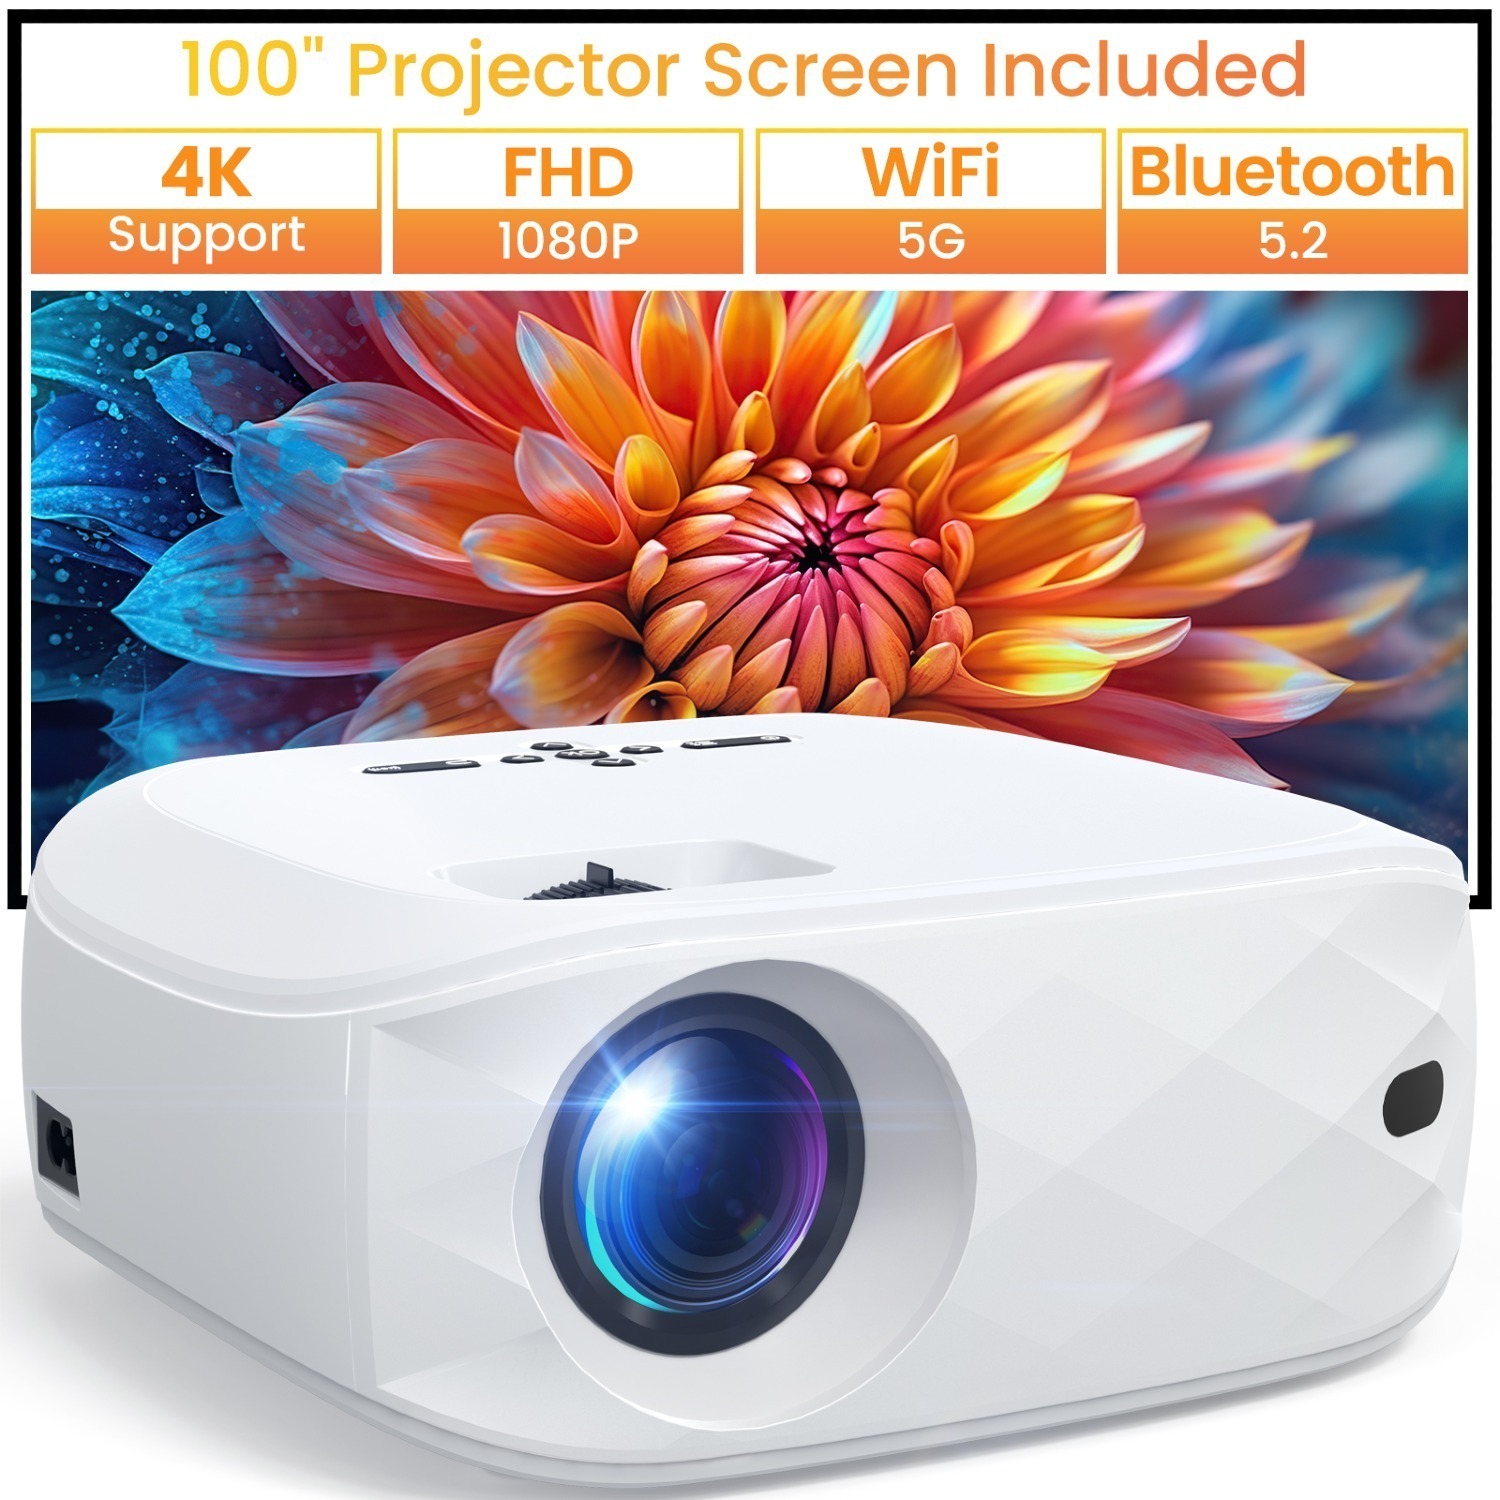 HAPPRUN F5 1080p HD Wifi/Bluetooth Projector w/ 100" Screen $77 + Free Shipping